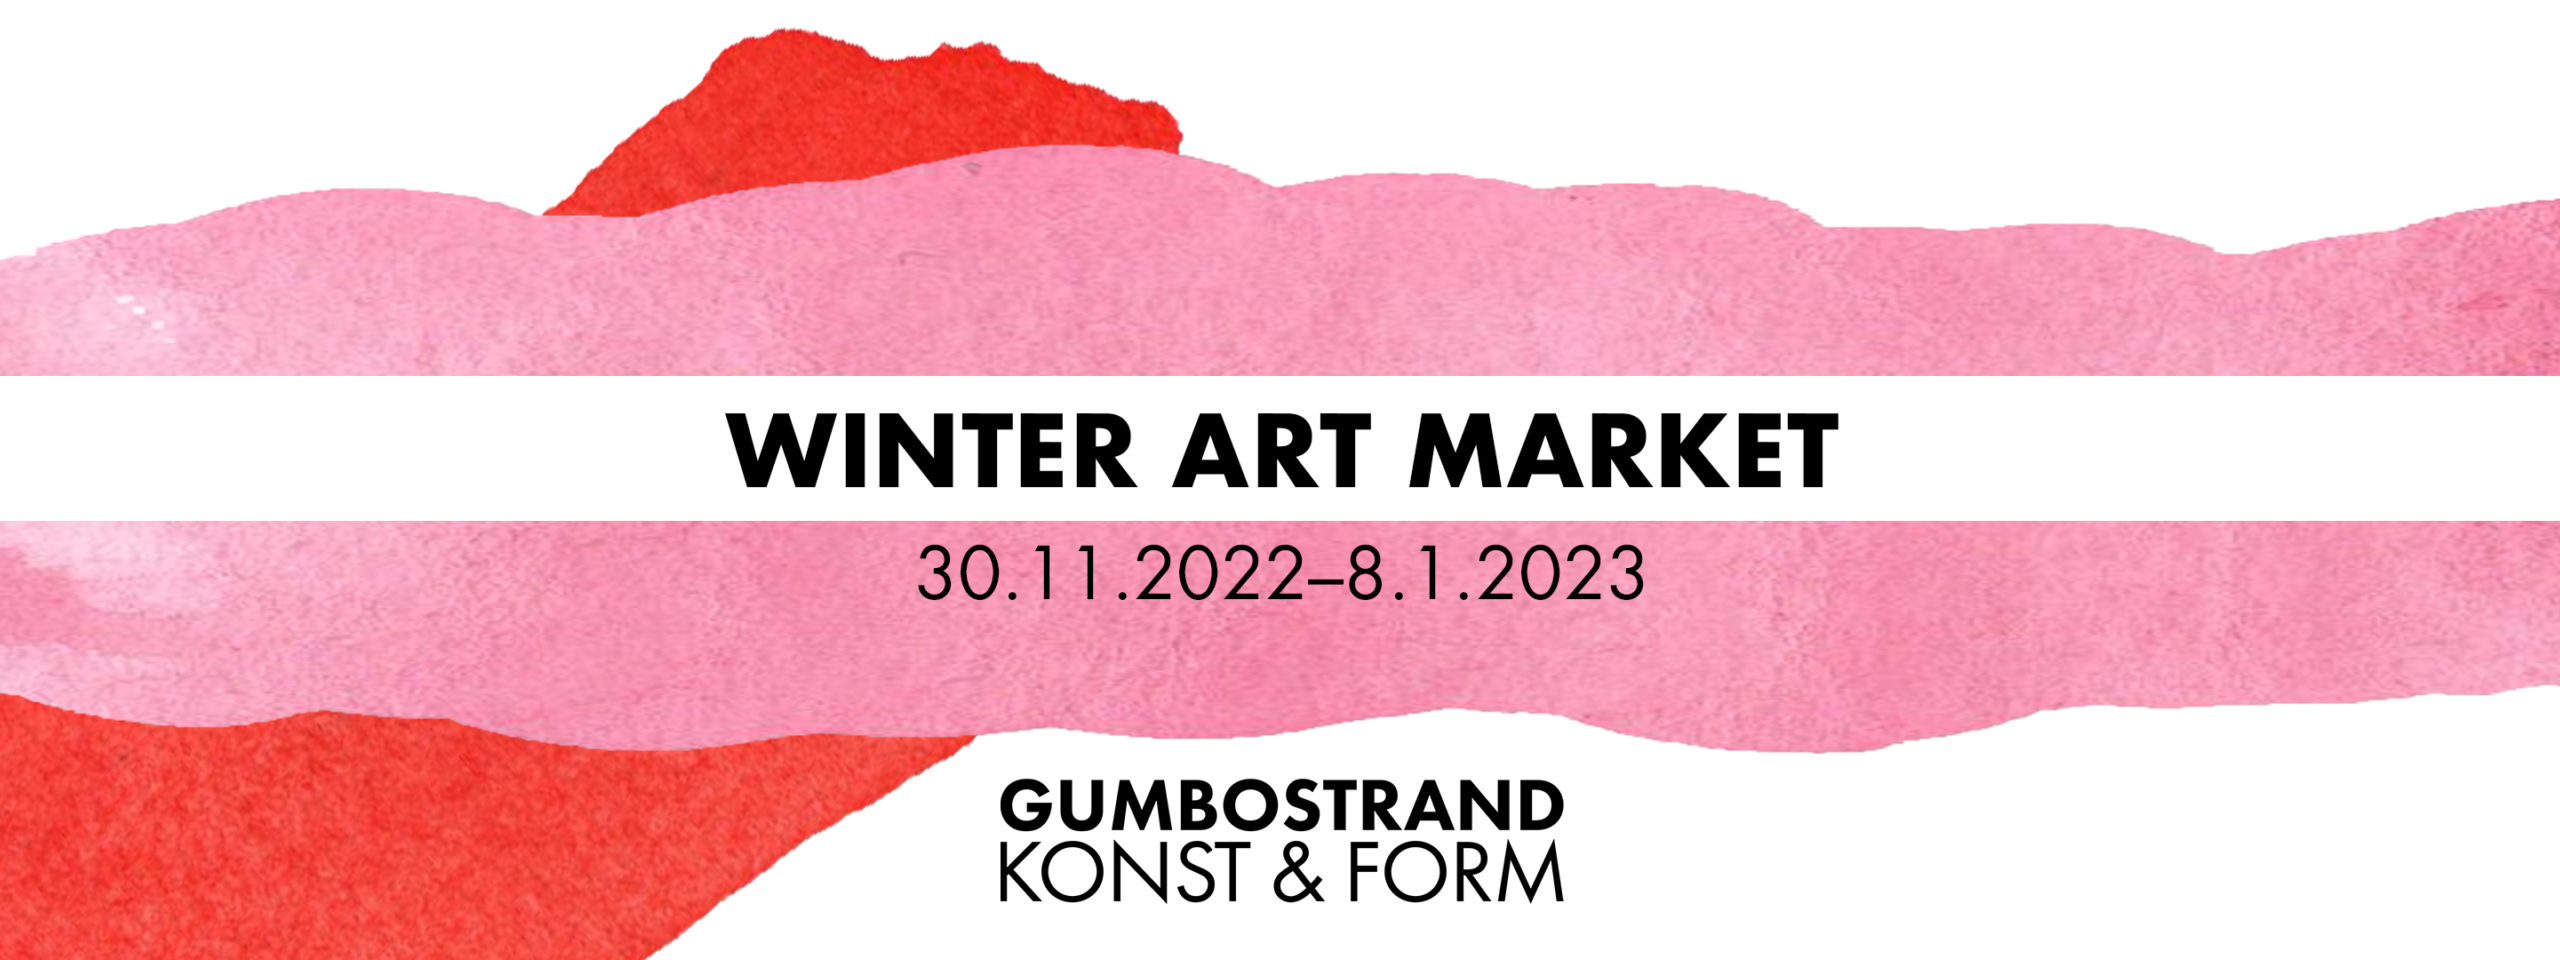 Winter Art Market 22